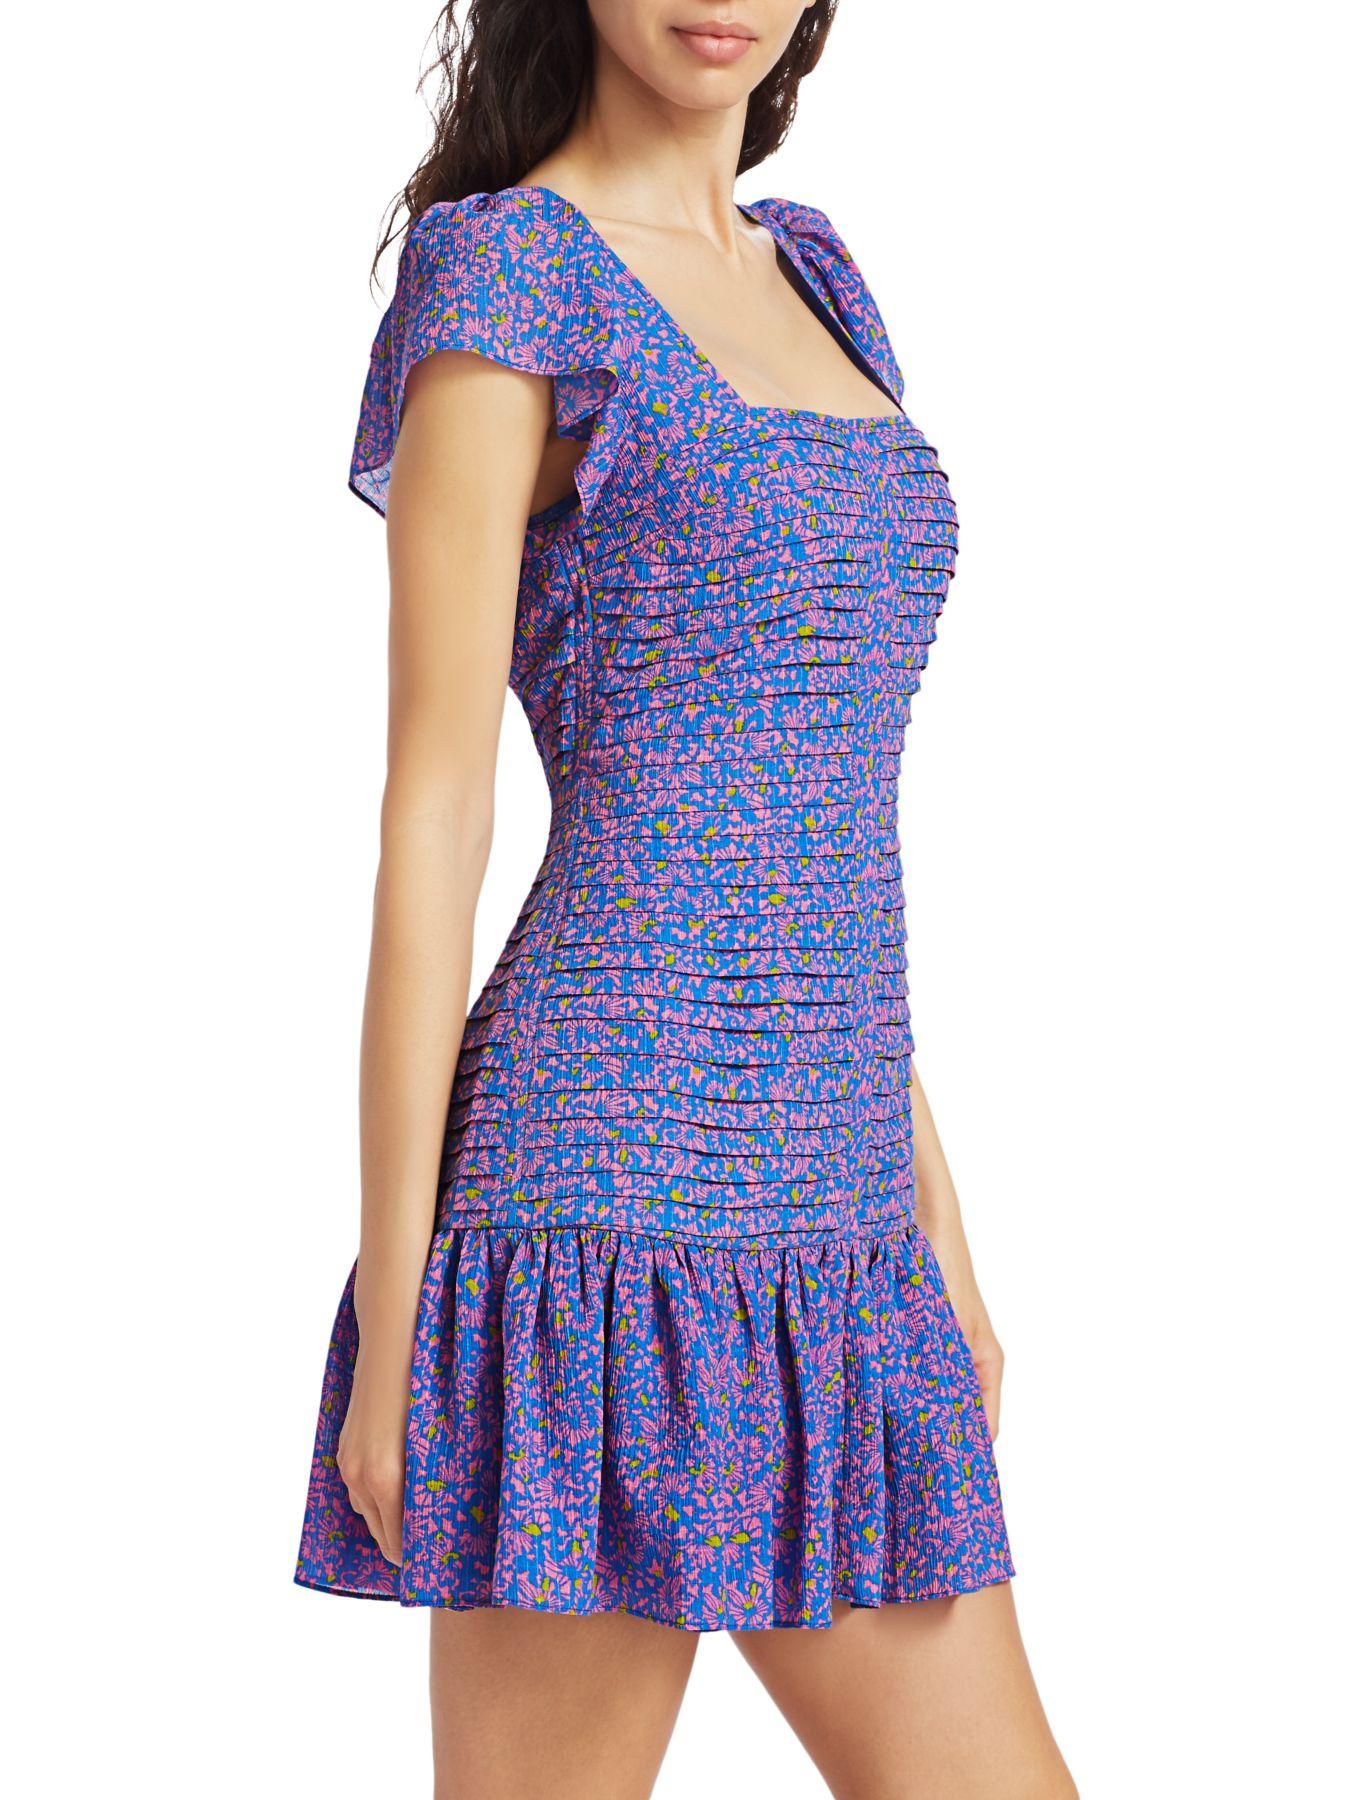 Tanya Taylor Silk Yvette Confetti Print Smocked Mini Dress in Blue - Lyst